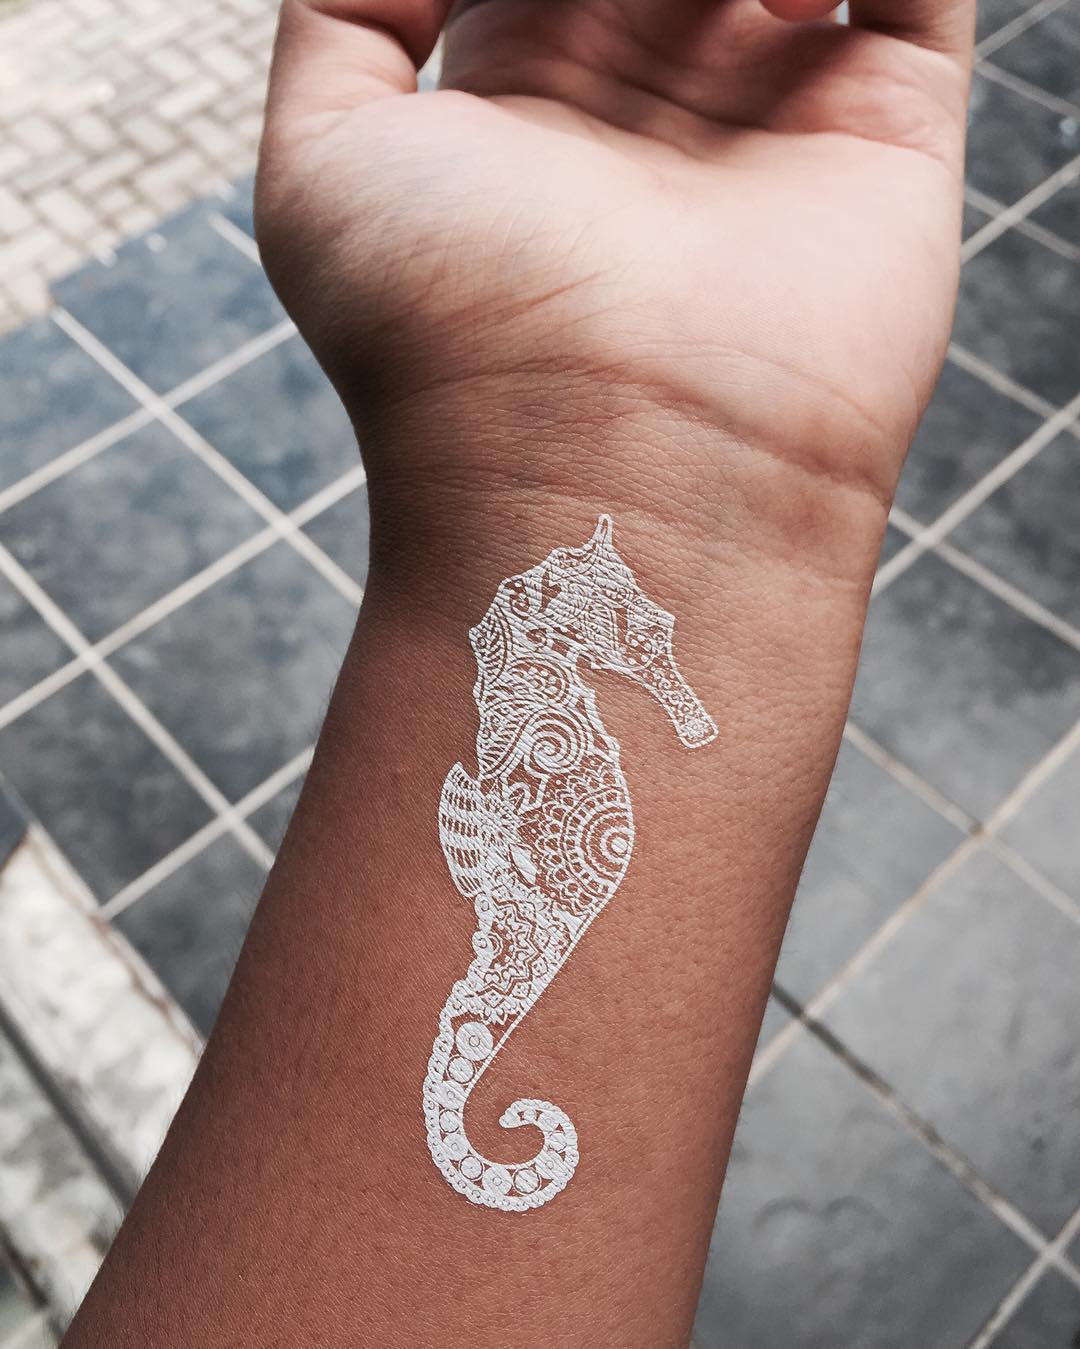 White Wrist Tattoo by @txmeekxh